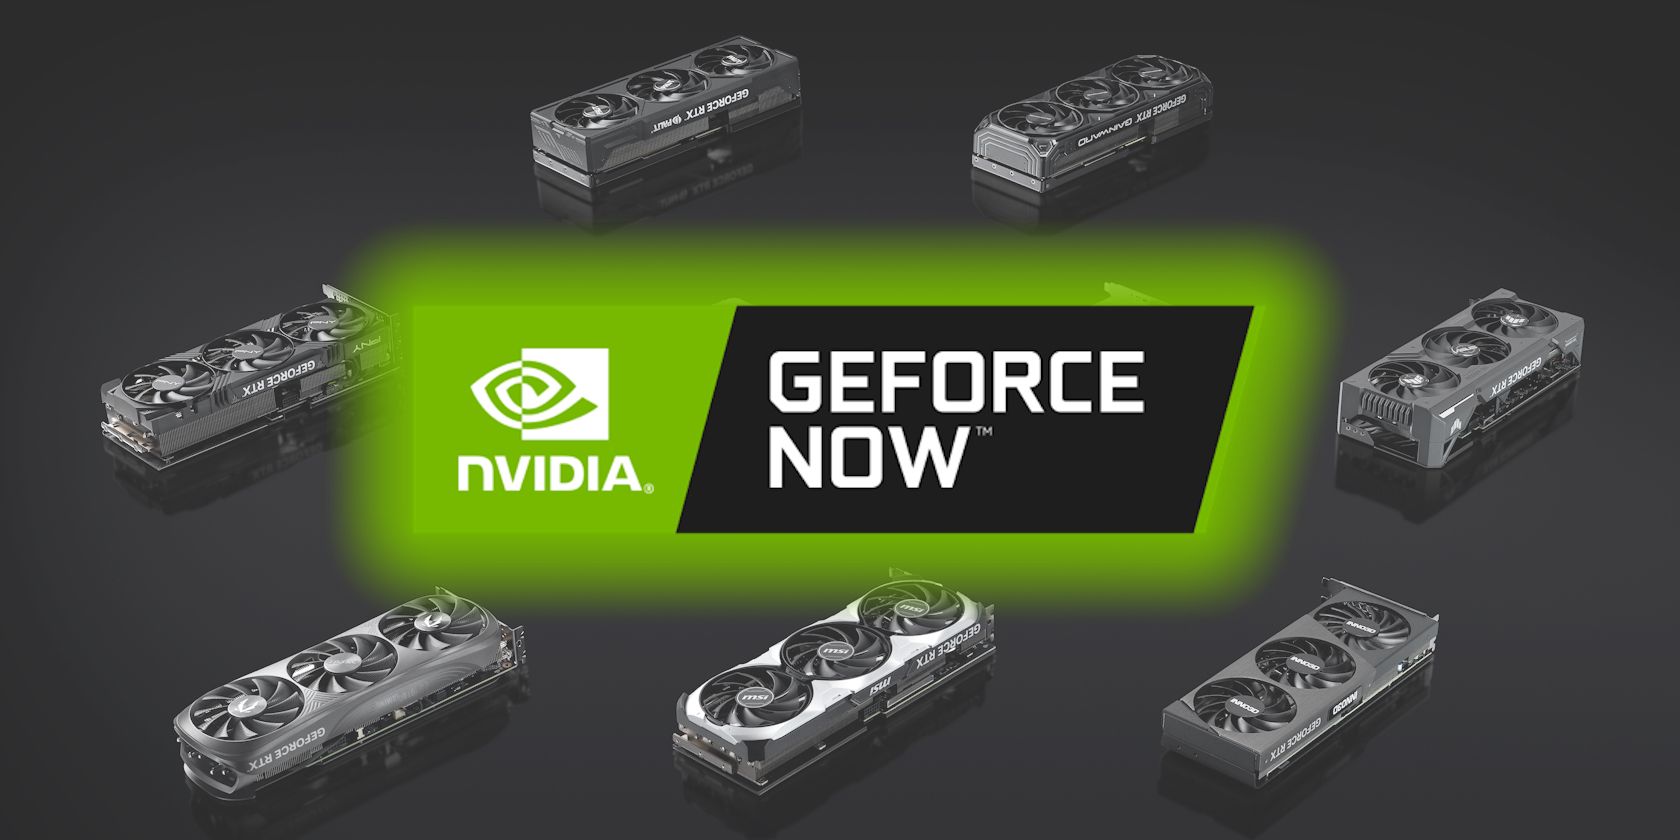 nvidia geforce now logo with rtx gpus background